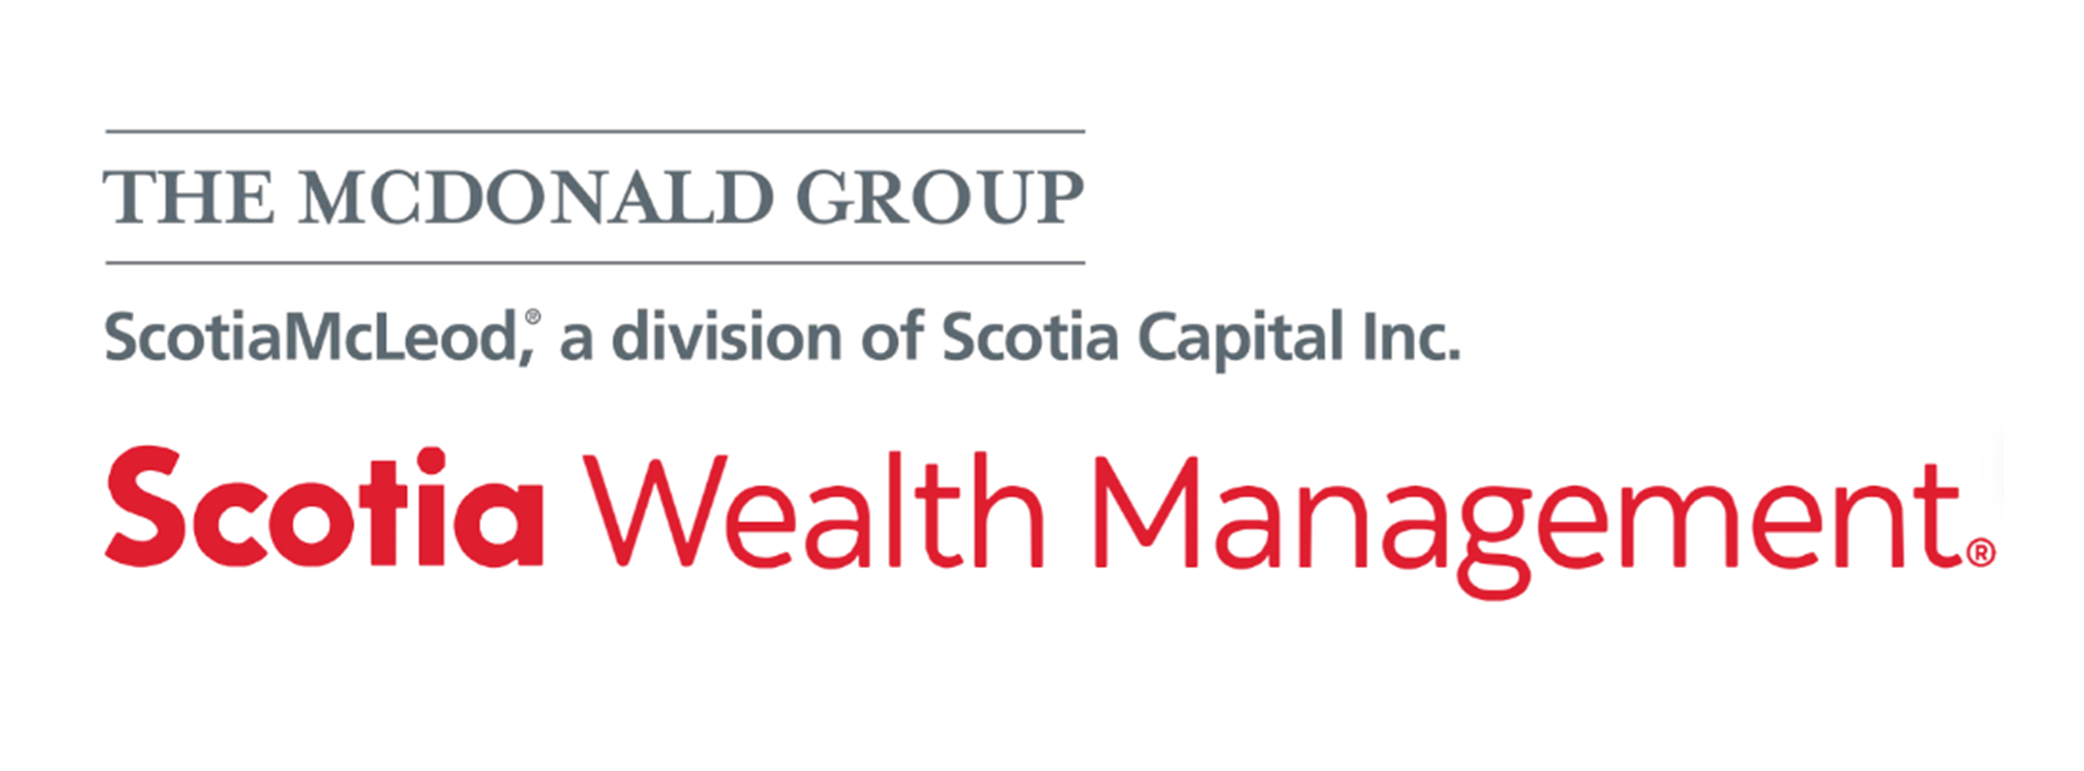 The McDonald Group Scotia Wealth Management